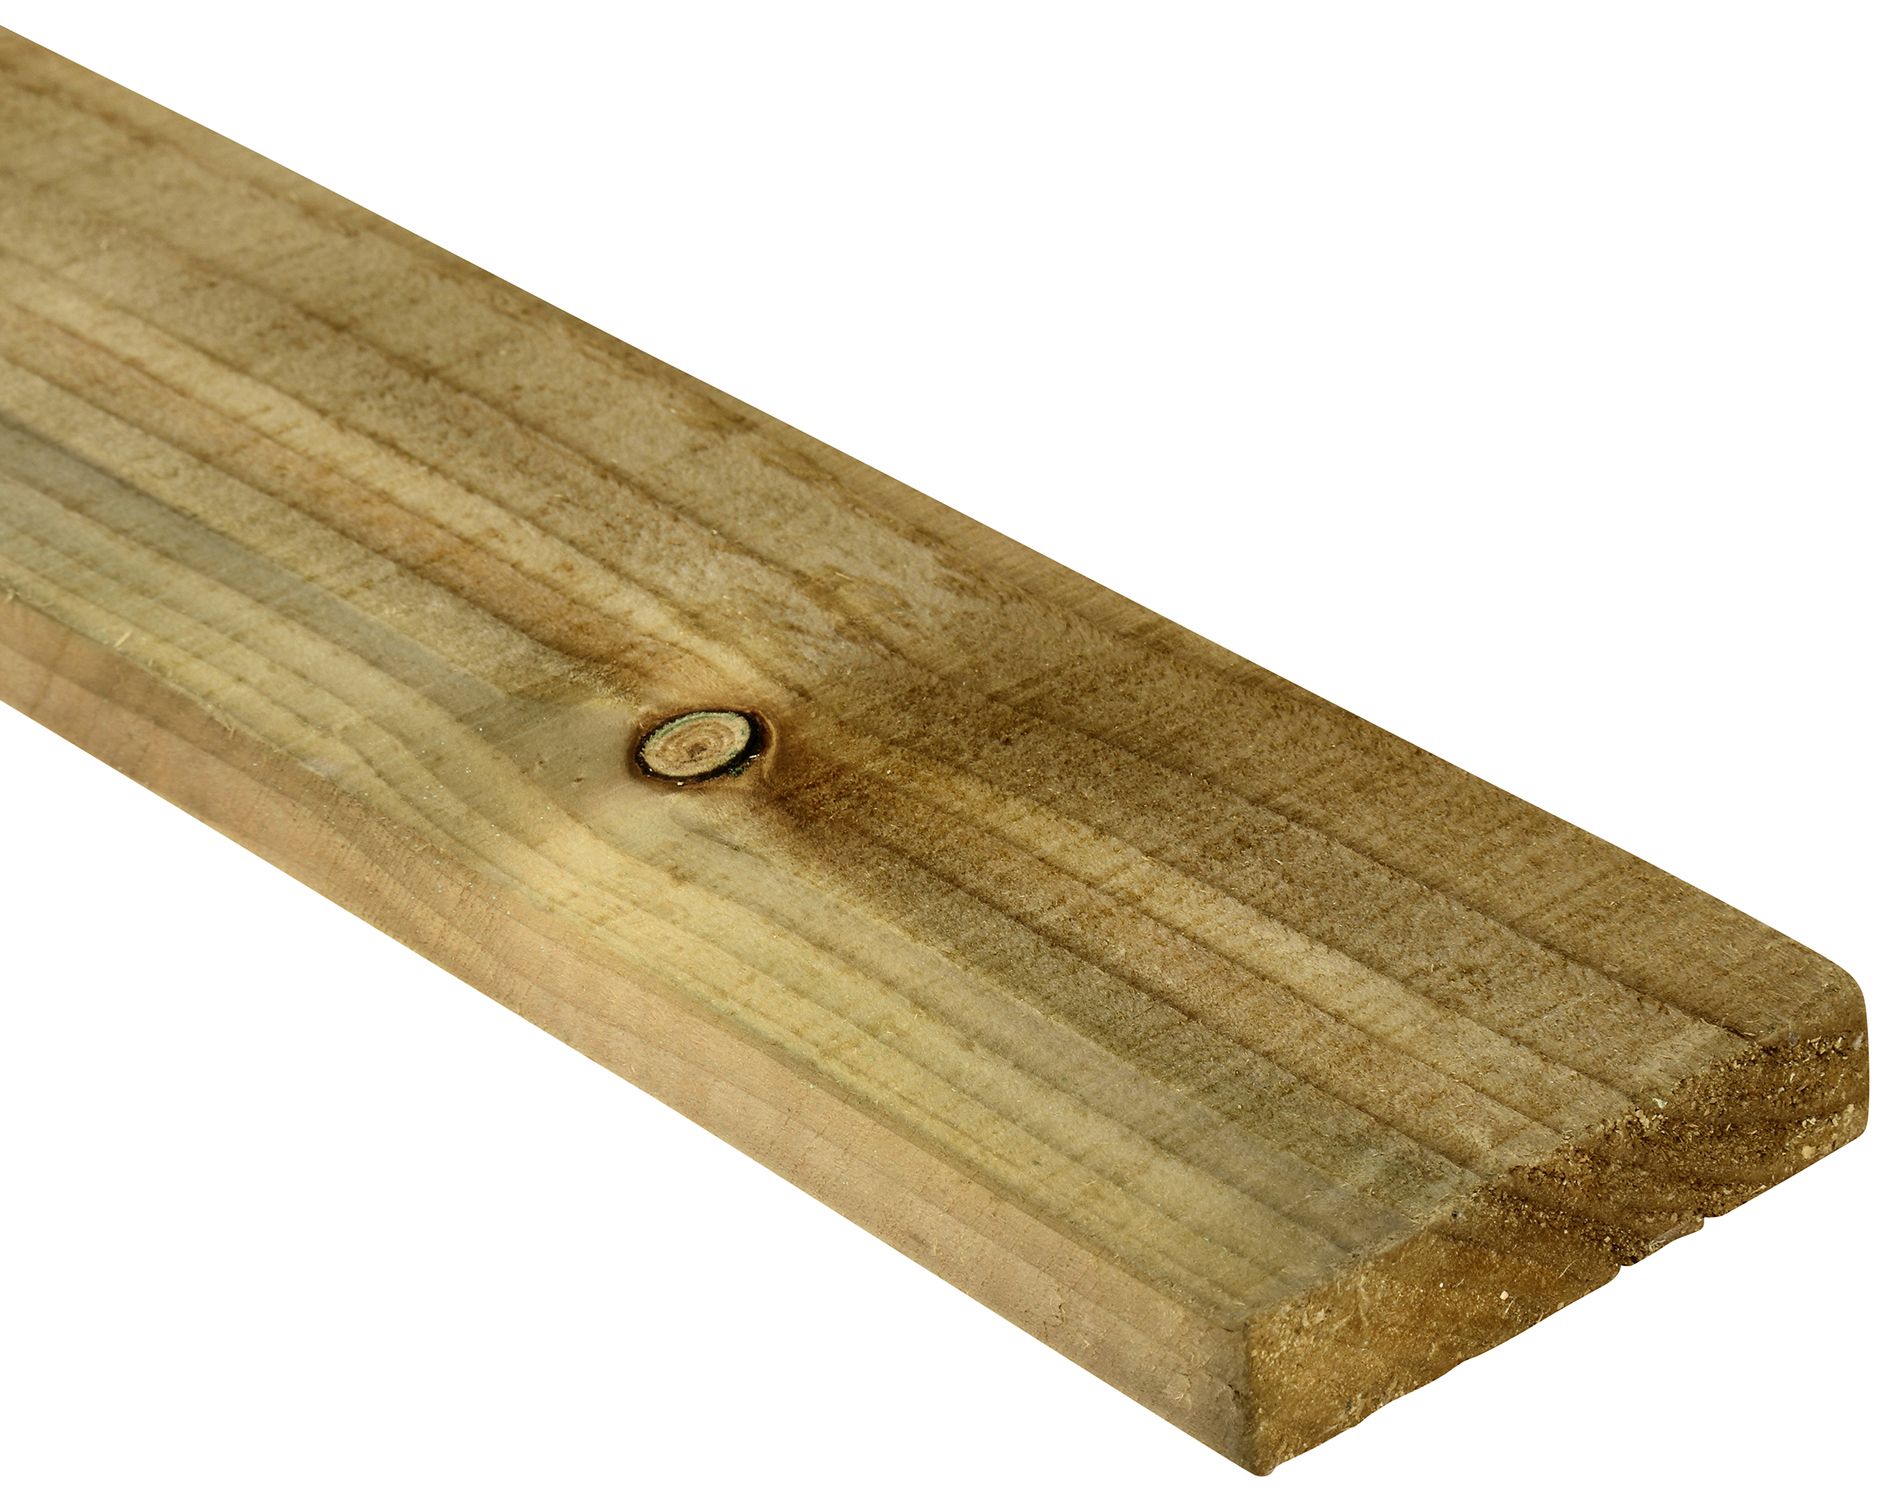 Wickes Treated Sawn Timber - 22 x 100 x 1800mm